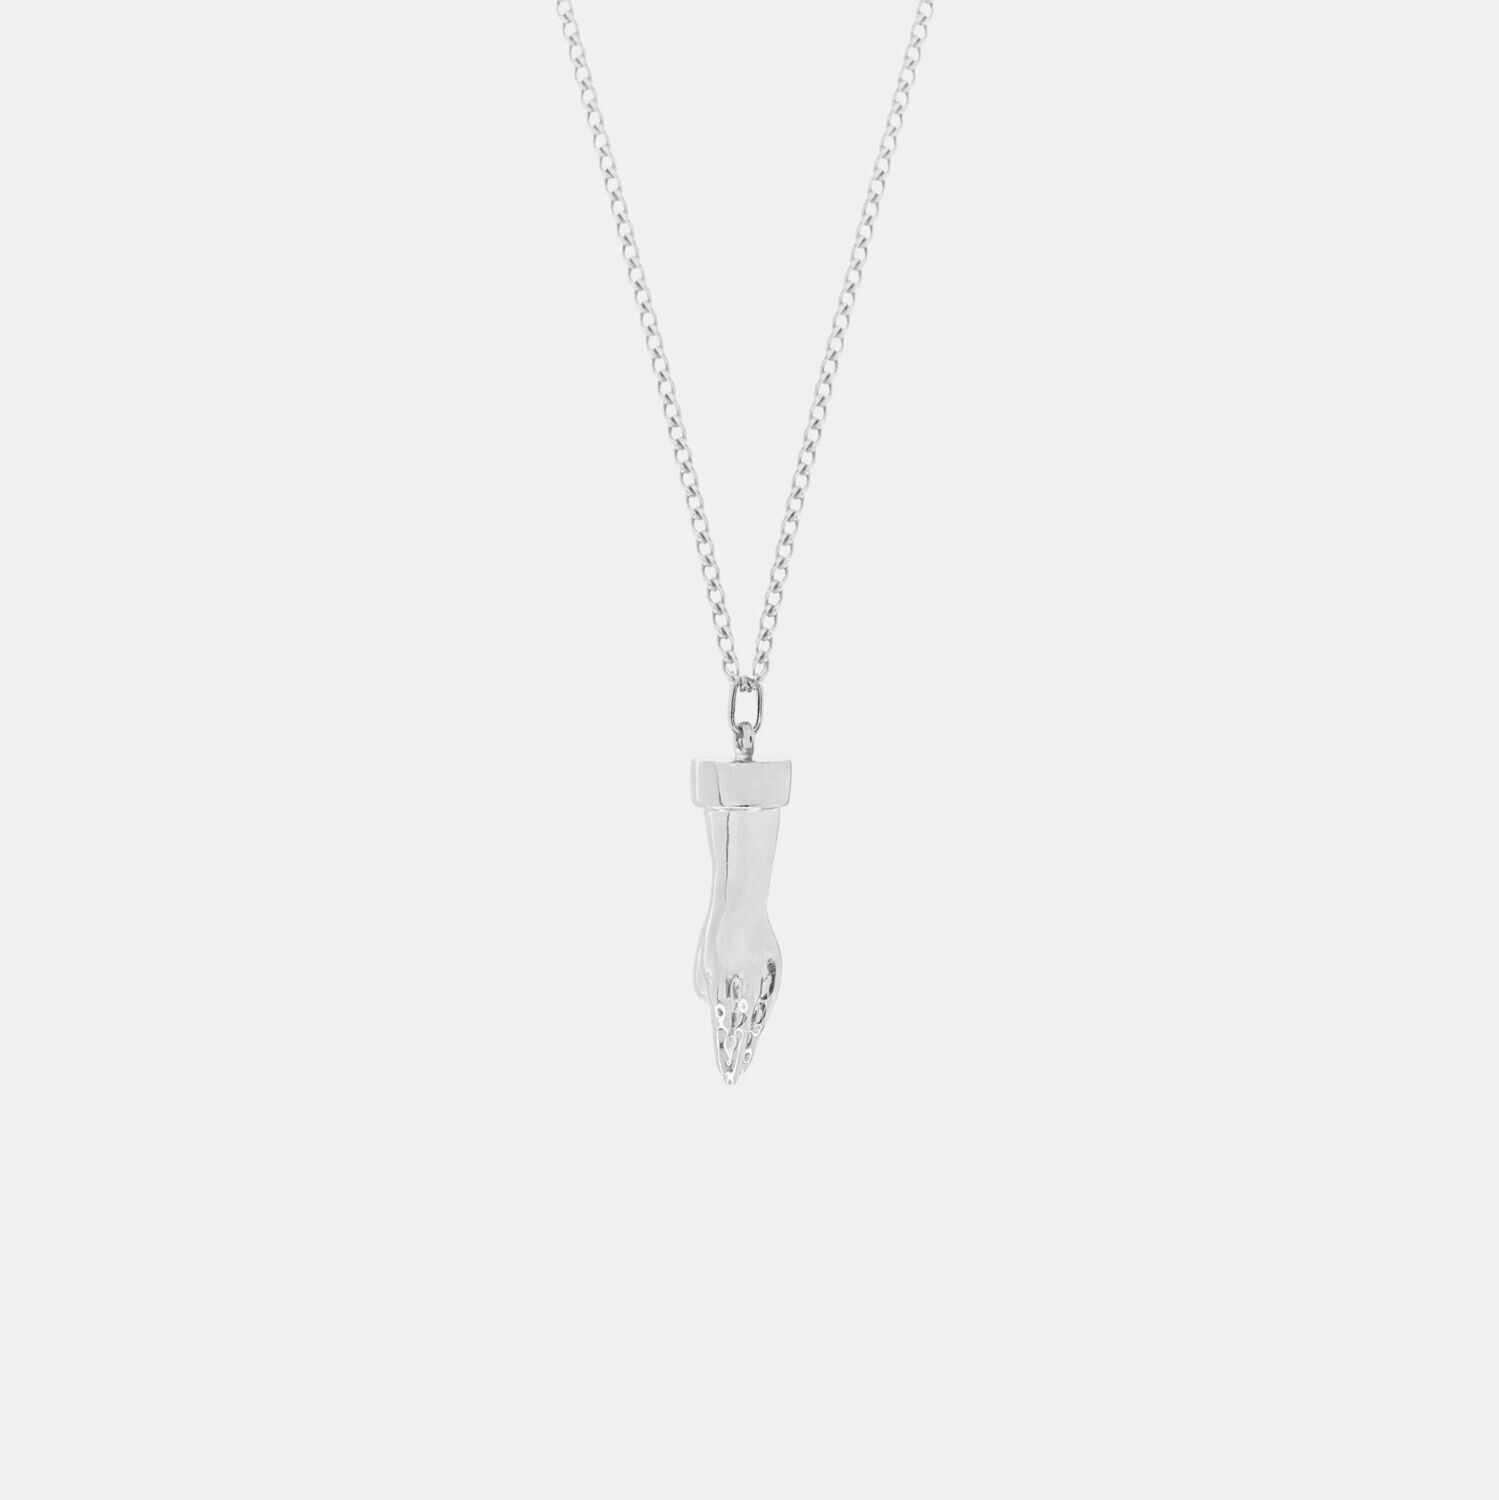 Hoemo World - Fisting Friend Pendant Necklace - Silver